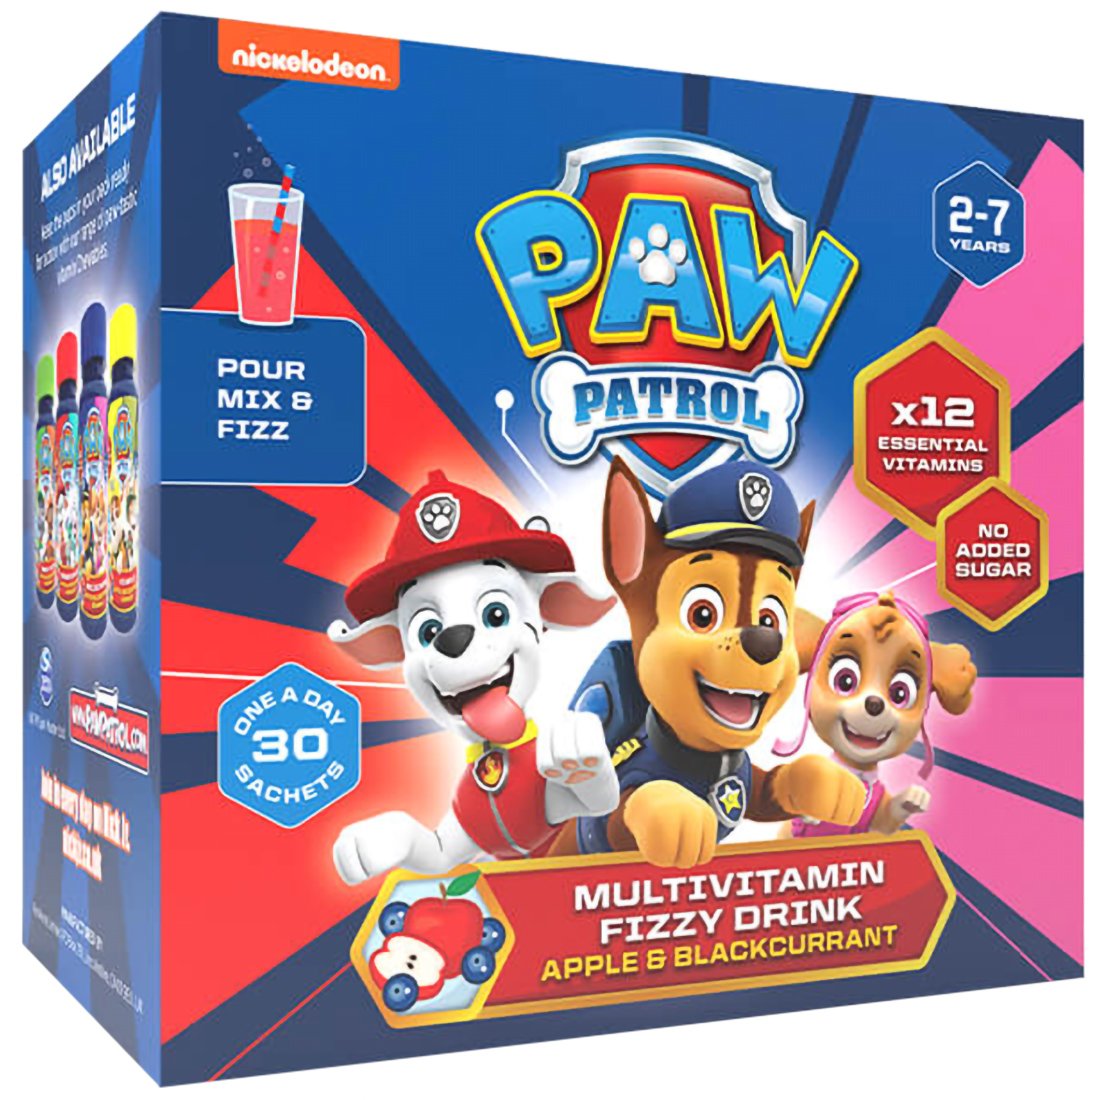 Nickelodeon Paw Patrol Multivitamins Fizzy Drink Συμπλήρωμα Διατροφής σε Σκόνη με Πολυβιταμίνες για Παιδιά 2-7 Ετών με Γεύση Μήλο & Φραγκοστάφυλλο 30 Sachets 50158